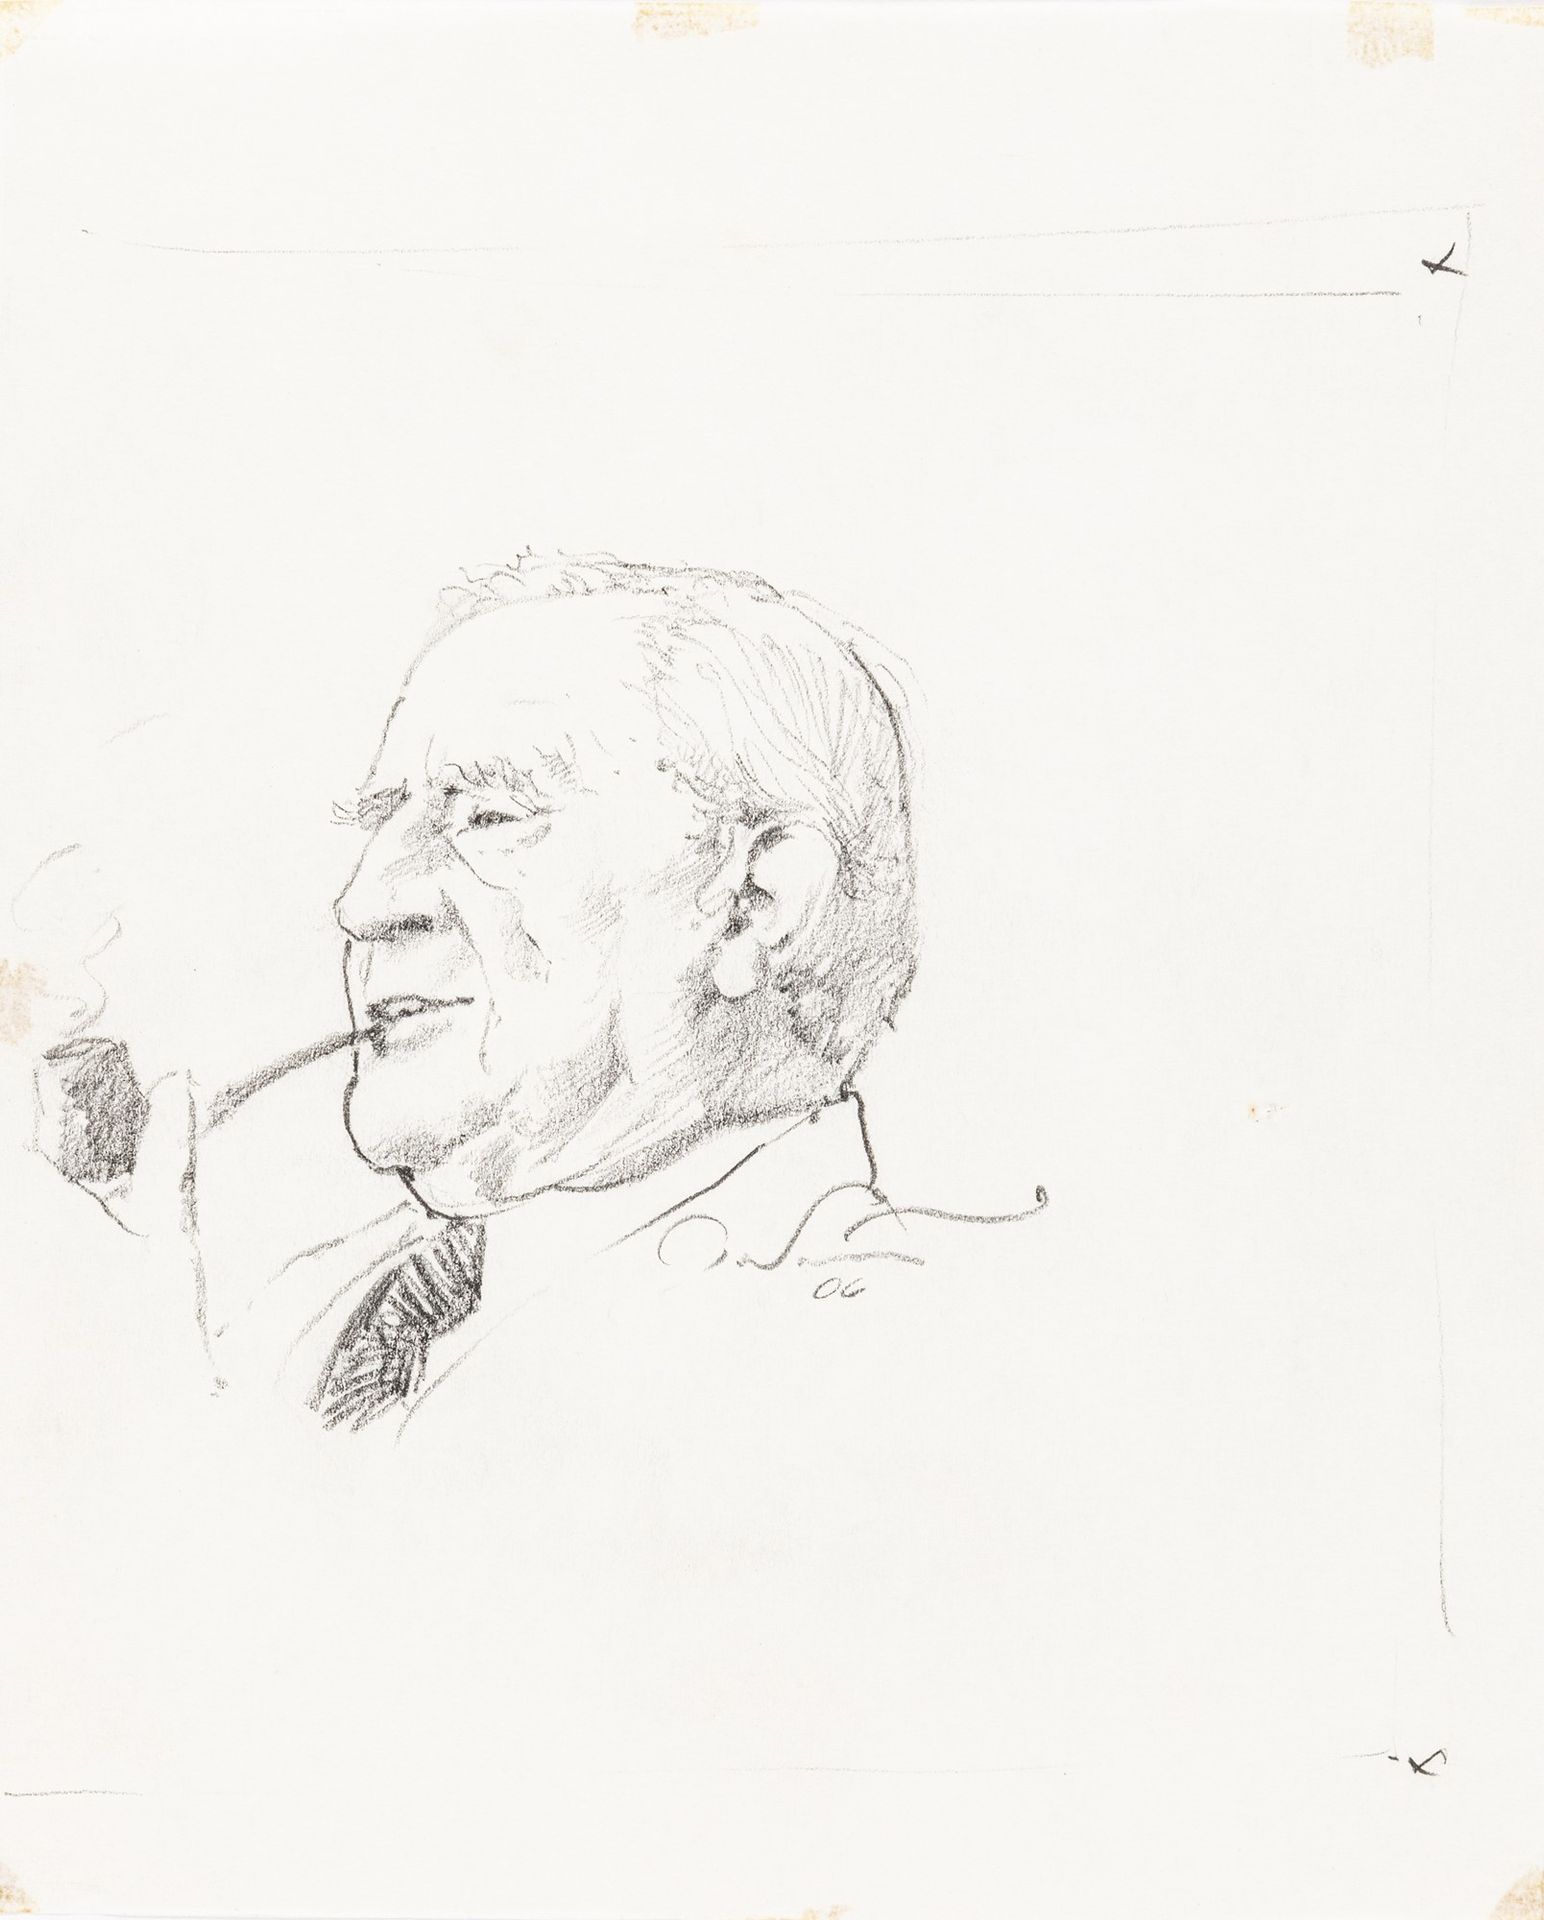 Ted Nasmith J.R.R. Tolkien, 2006

pencil on paper
25,5 x 31 cm
Original drawing &hellip;